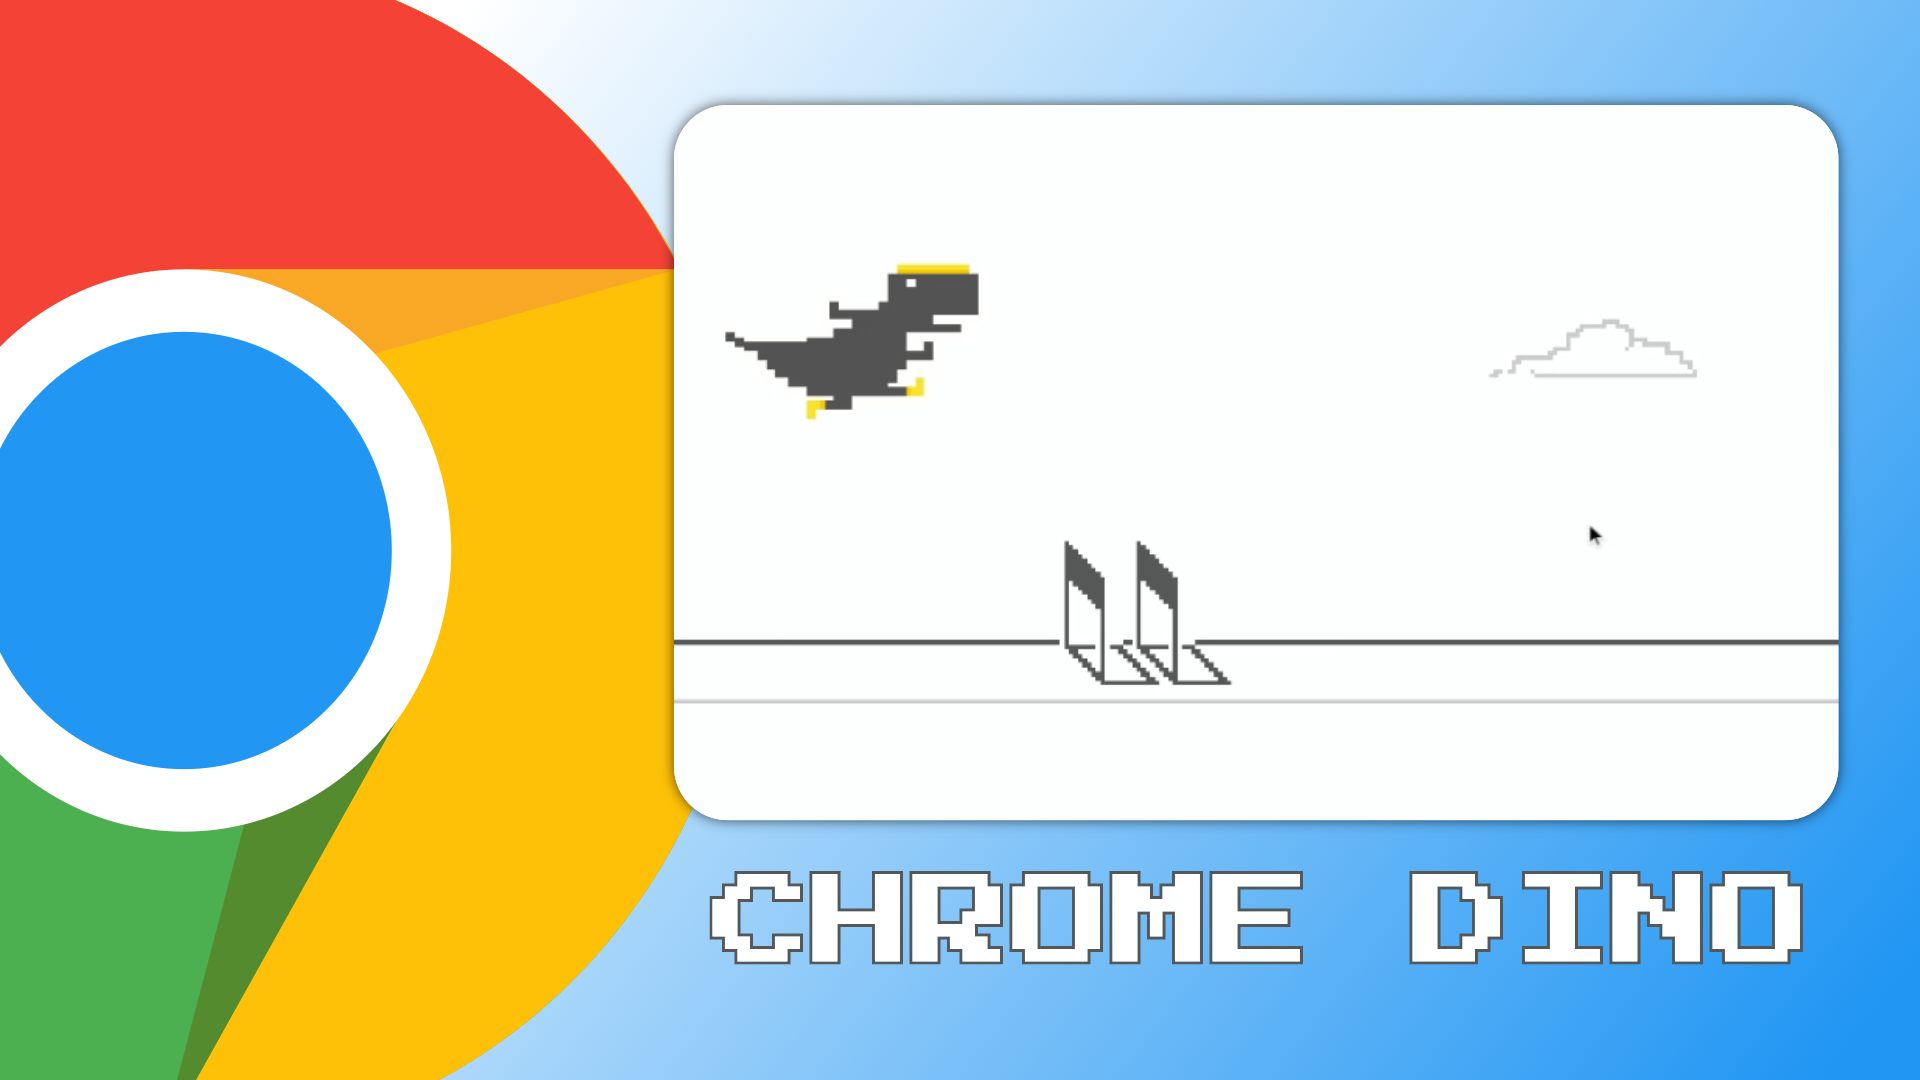 Let me explain the Google Chrome Dinosaur game